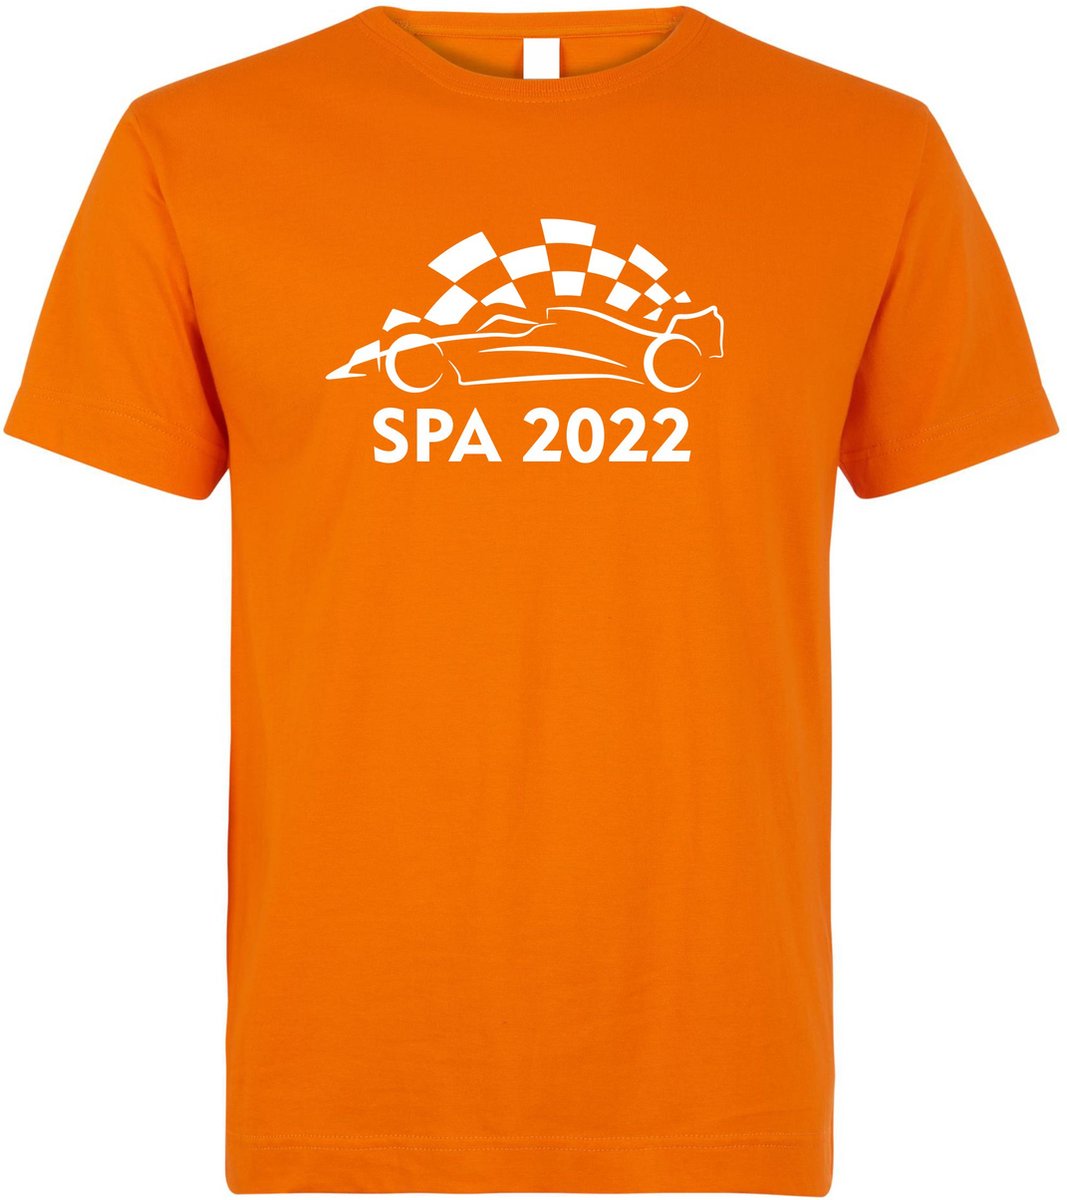 T-shirt kinderen Spa 2022 met raceauto | Max Verstappen / Red Bull Racing / Formule 1 fan | Grand Prix Circuit Spa-Francorchamps | kleding shirt | Oranje | maat 140